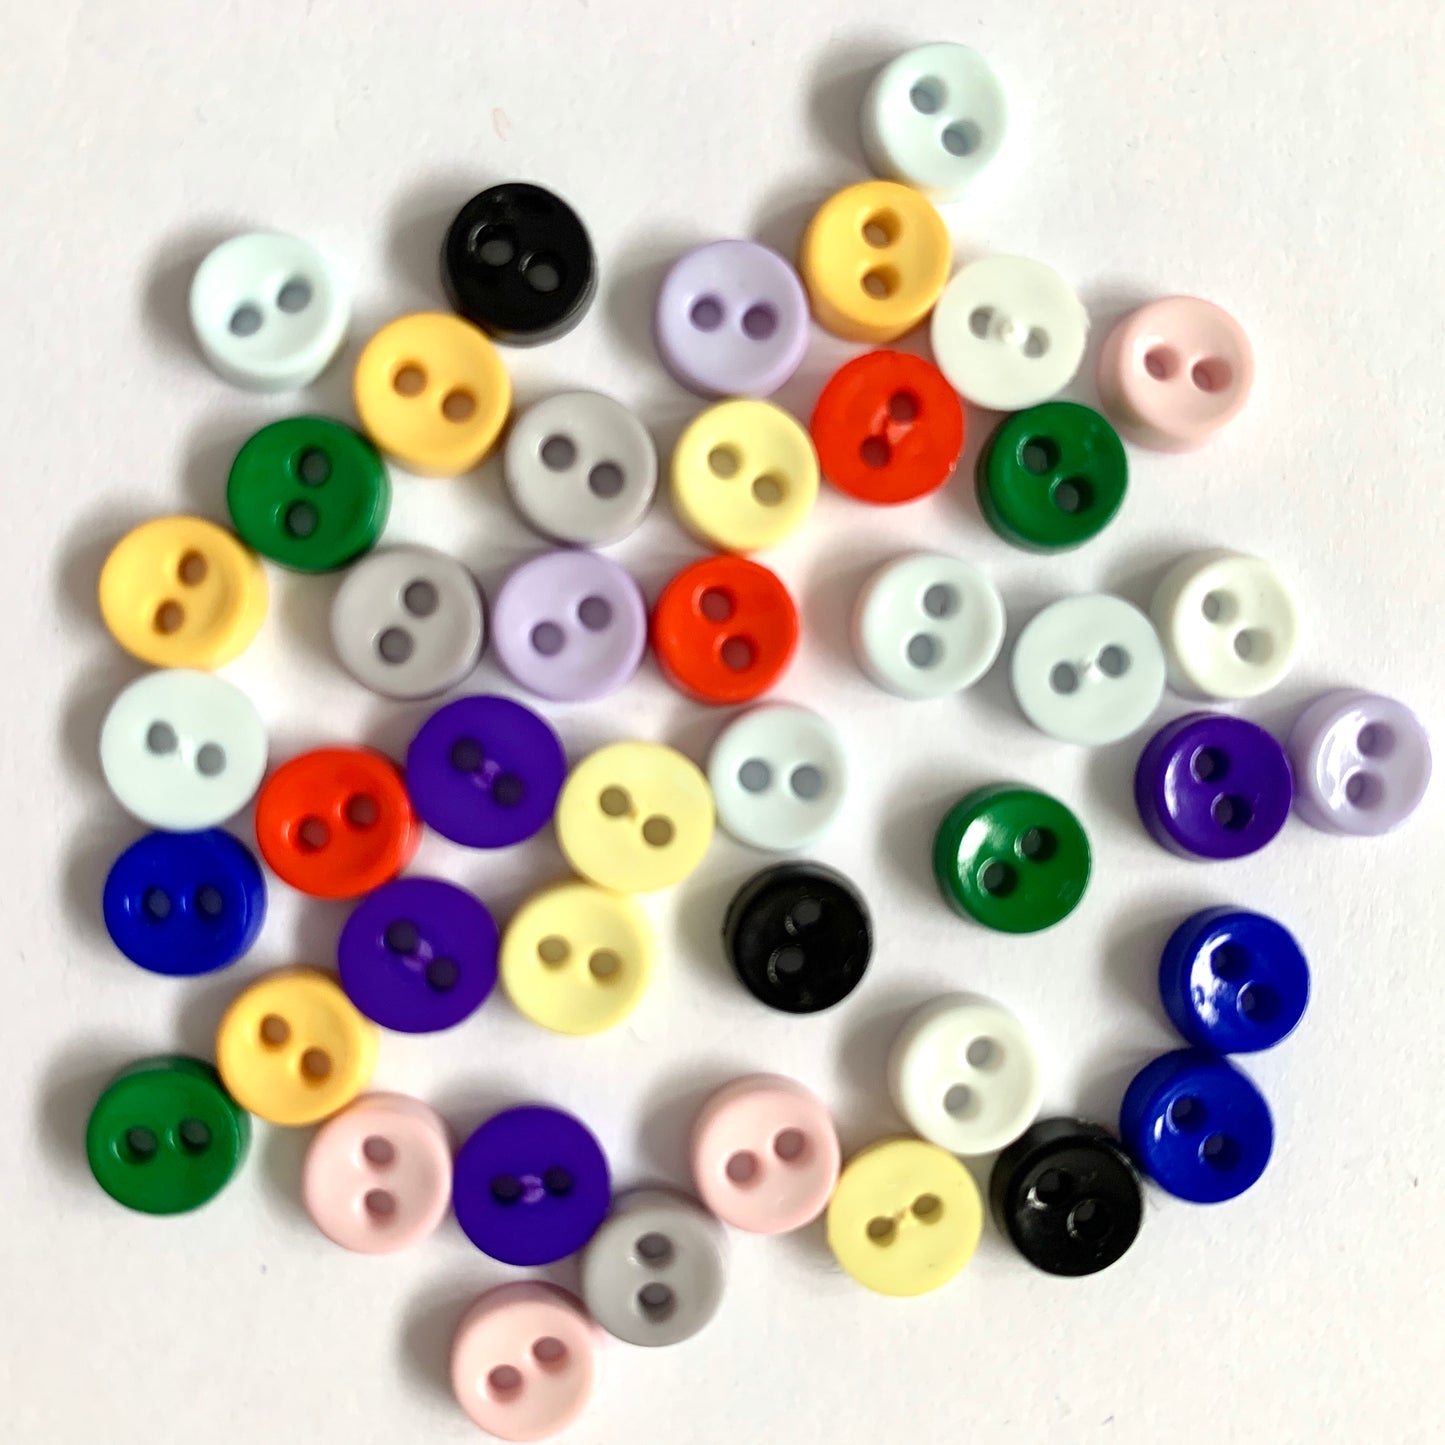 6mm Two Hole Doll Buttons | EN71, REACH & Annex II Compliant